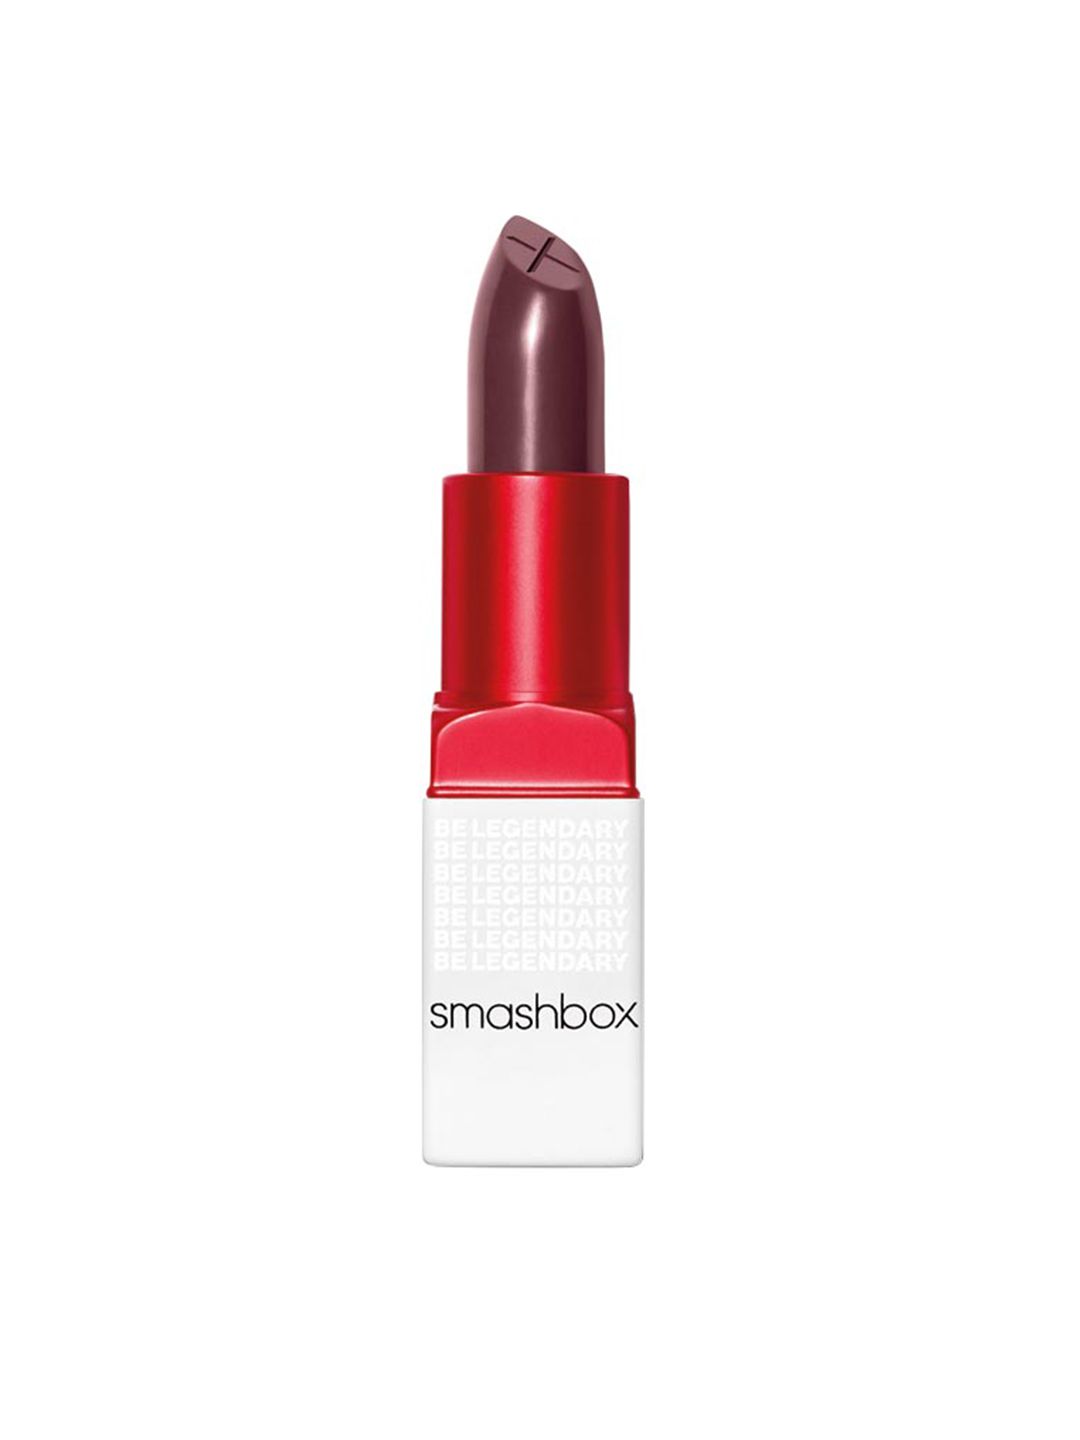 Smashbox Be Legendary Prime & Plush Lipstick - So Twisted Price in India